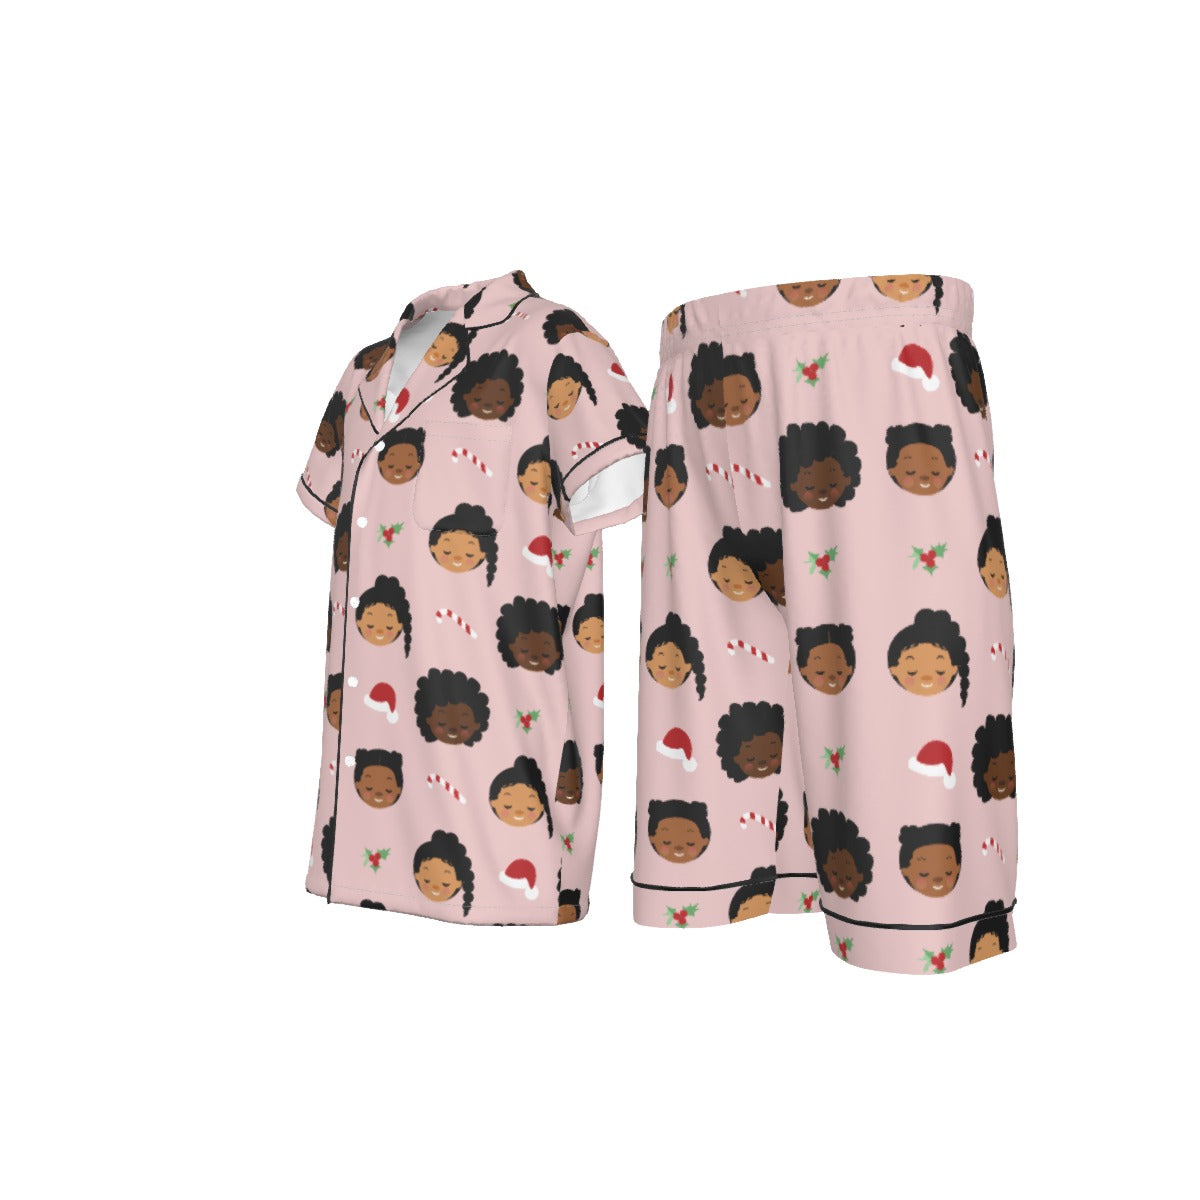 She’s Ready for Christmas satin pajama set for girls (pink)